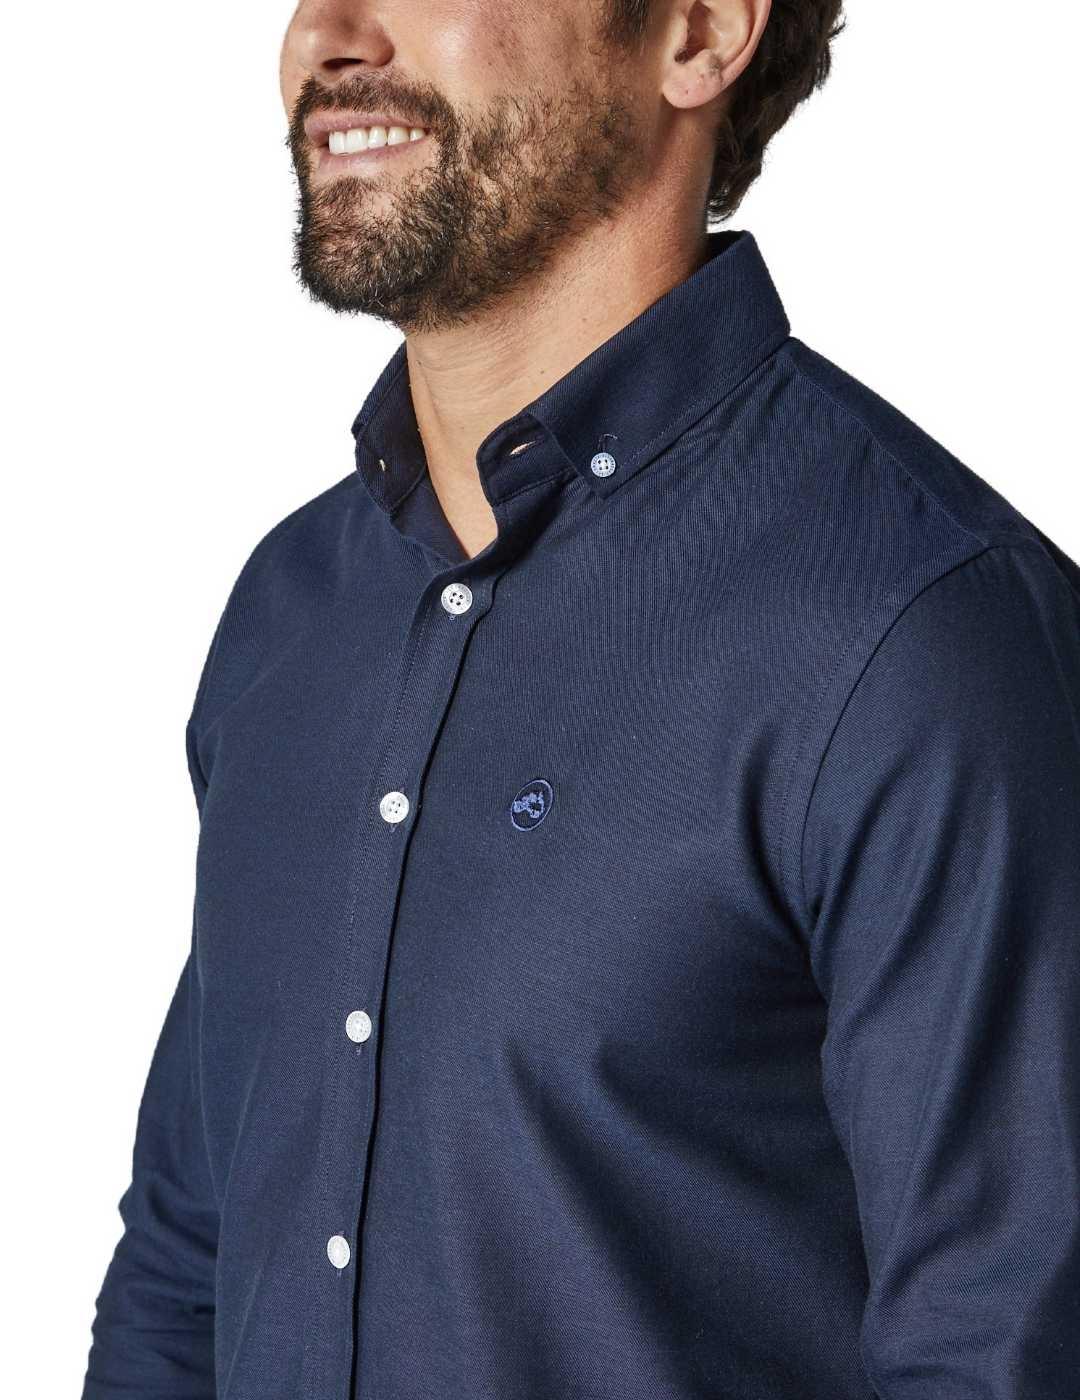 Camisa Altonadock lisa azul marino Slim fit para hombre